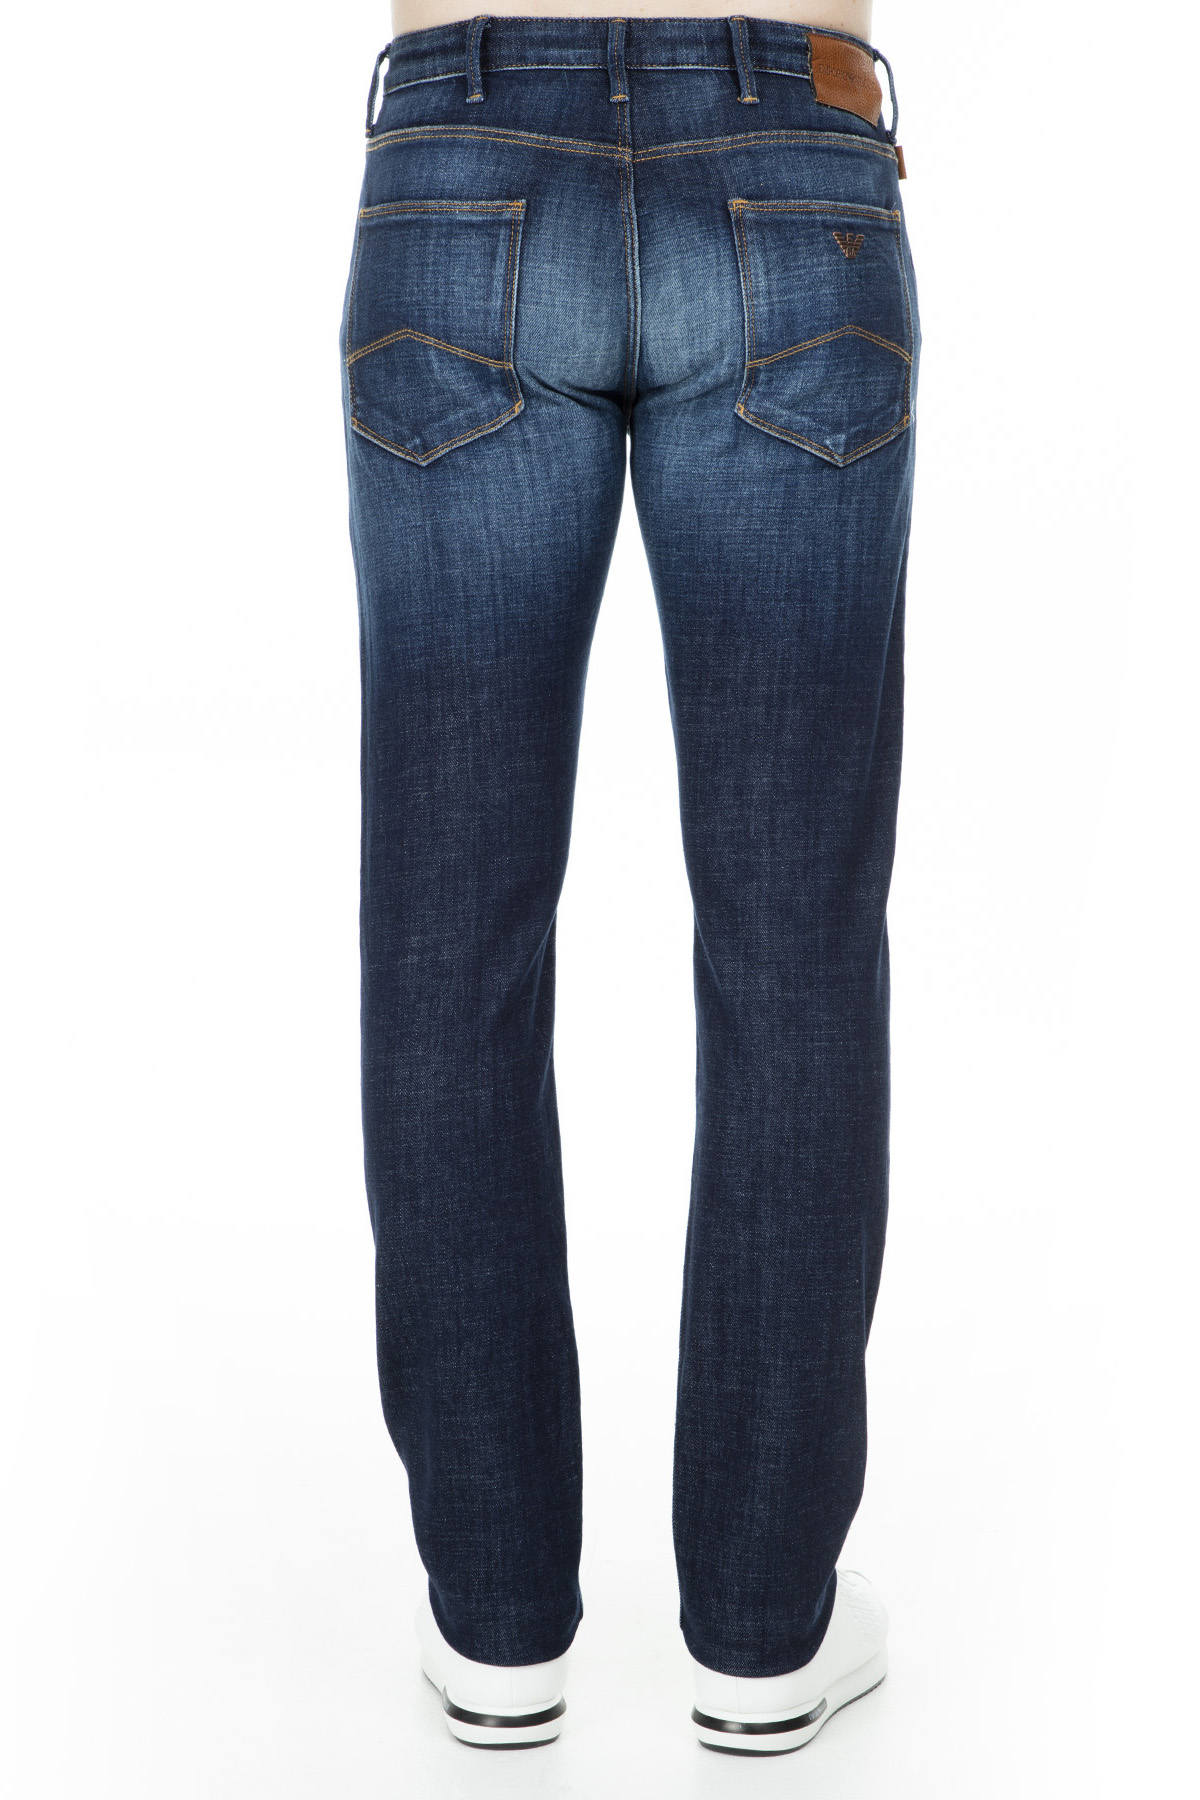 Emporio Armani J06 Jeans Erkek Kot Pantolon S 3G1J06 1D3GZ 941 LACİVERT